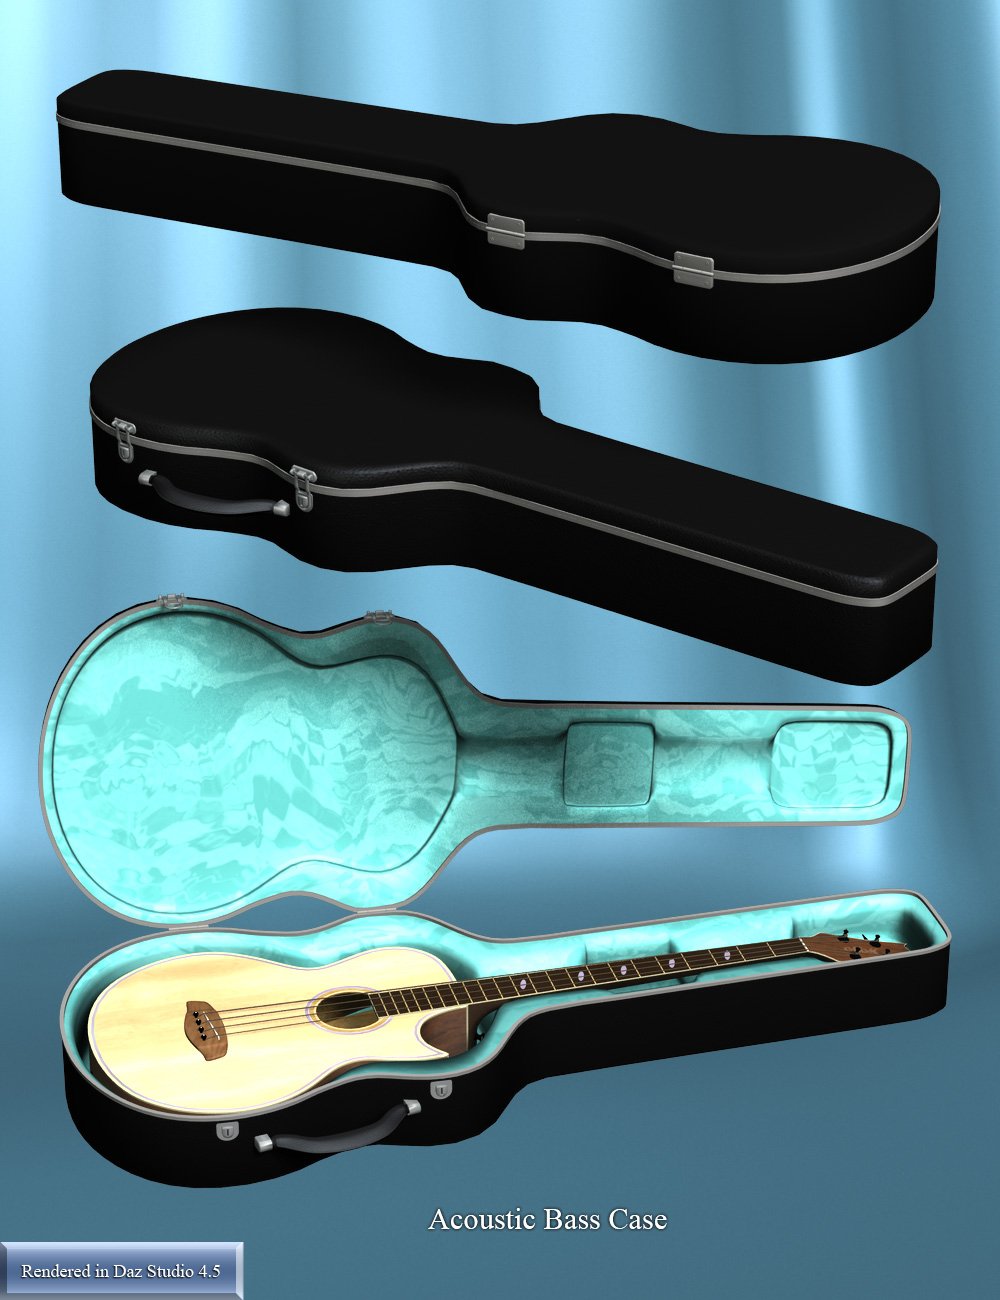 Melody Man Acoustic Guitars by: Don AlbertSimon3D, 3D Models by Daz 3D